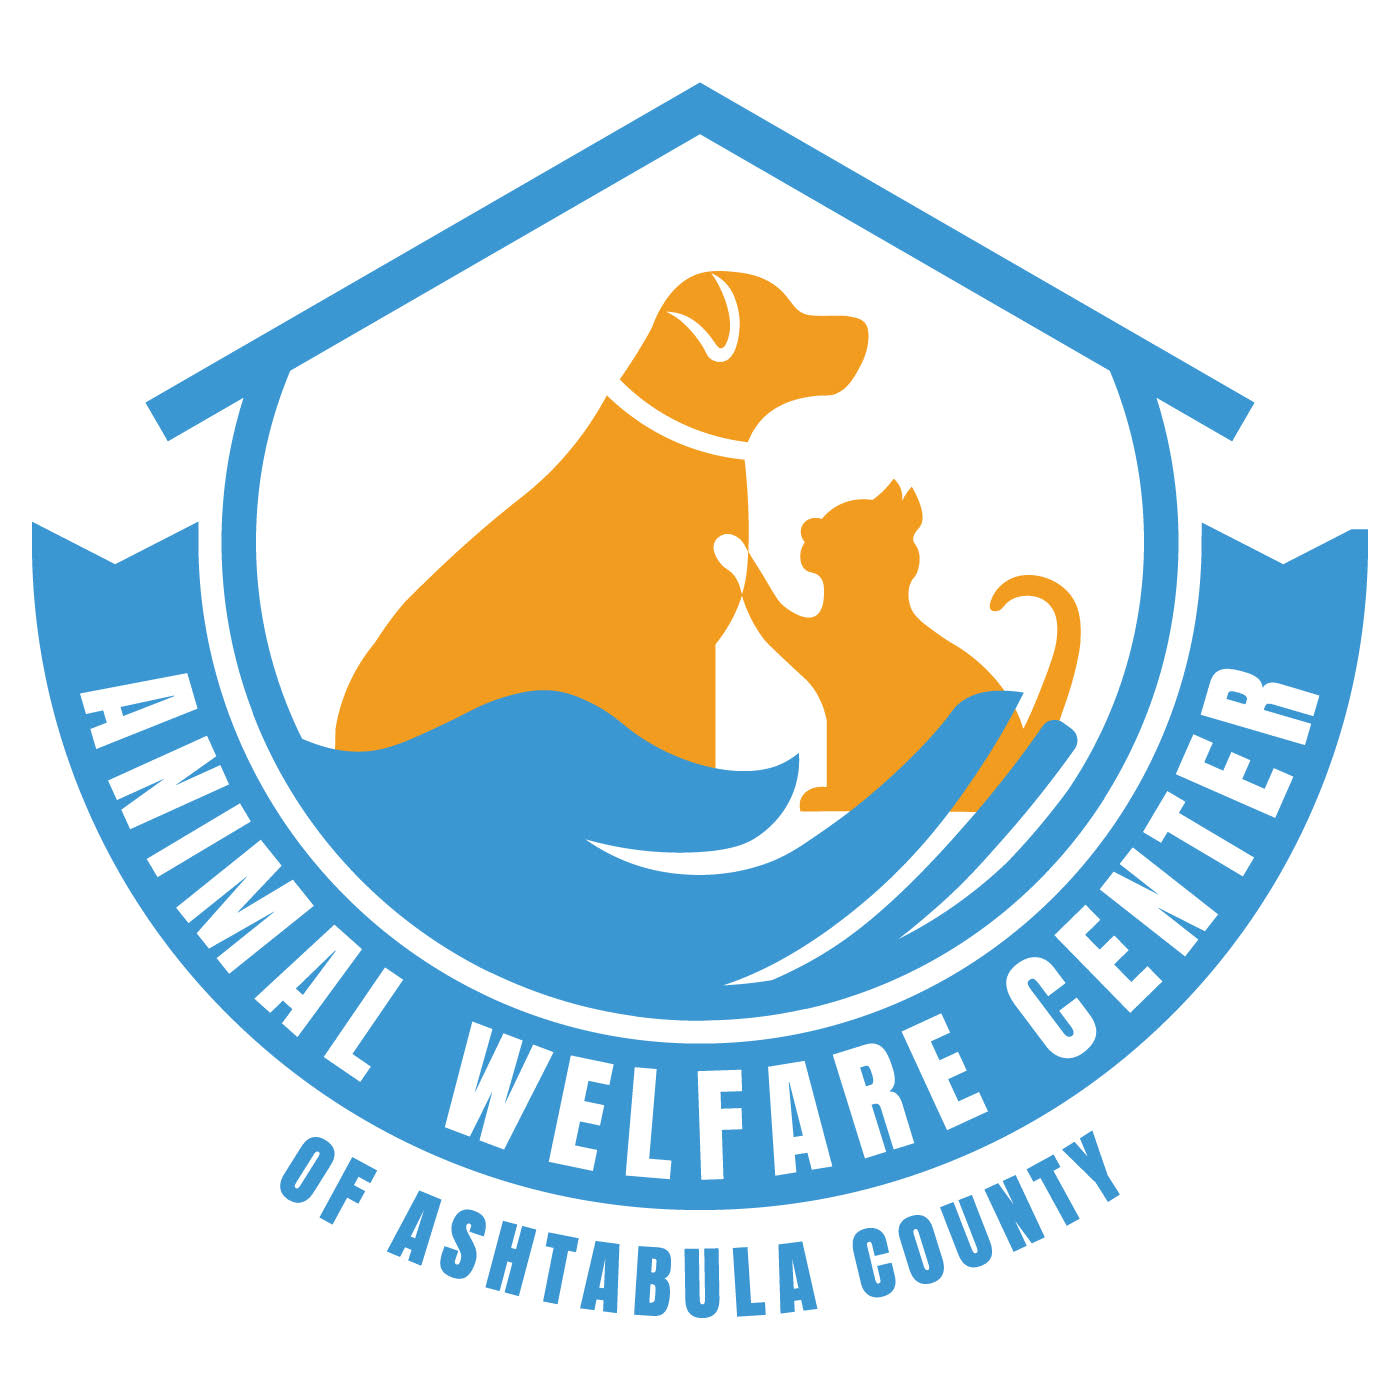 Animal Welfare Center of Ashtabula County logo